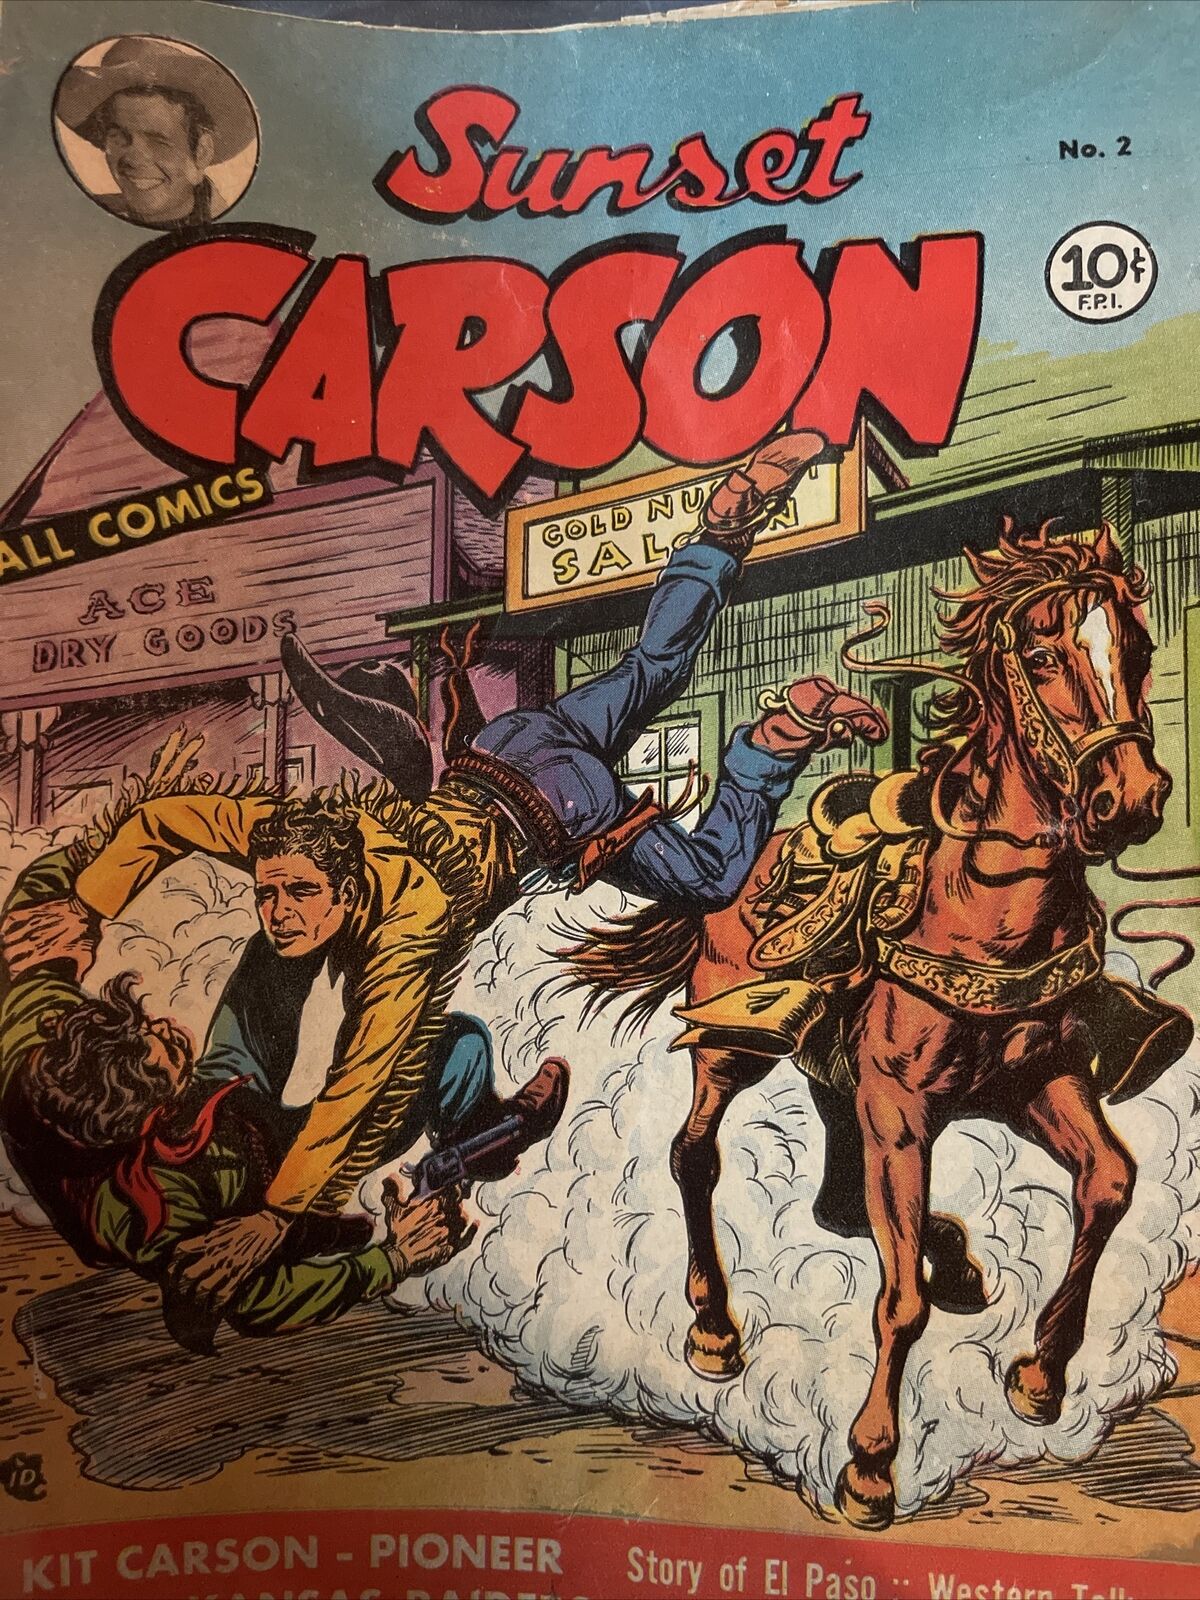 Sunset Carson #2 1951 Kit Carson El Paso Golden Age Western